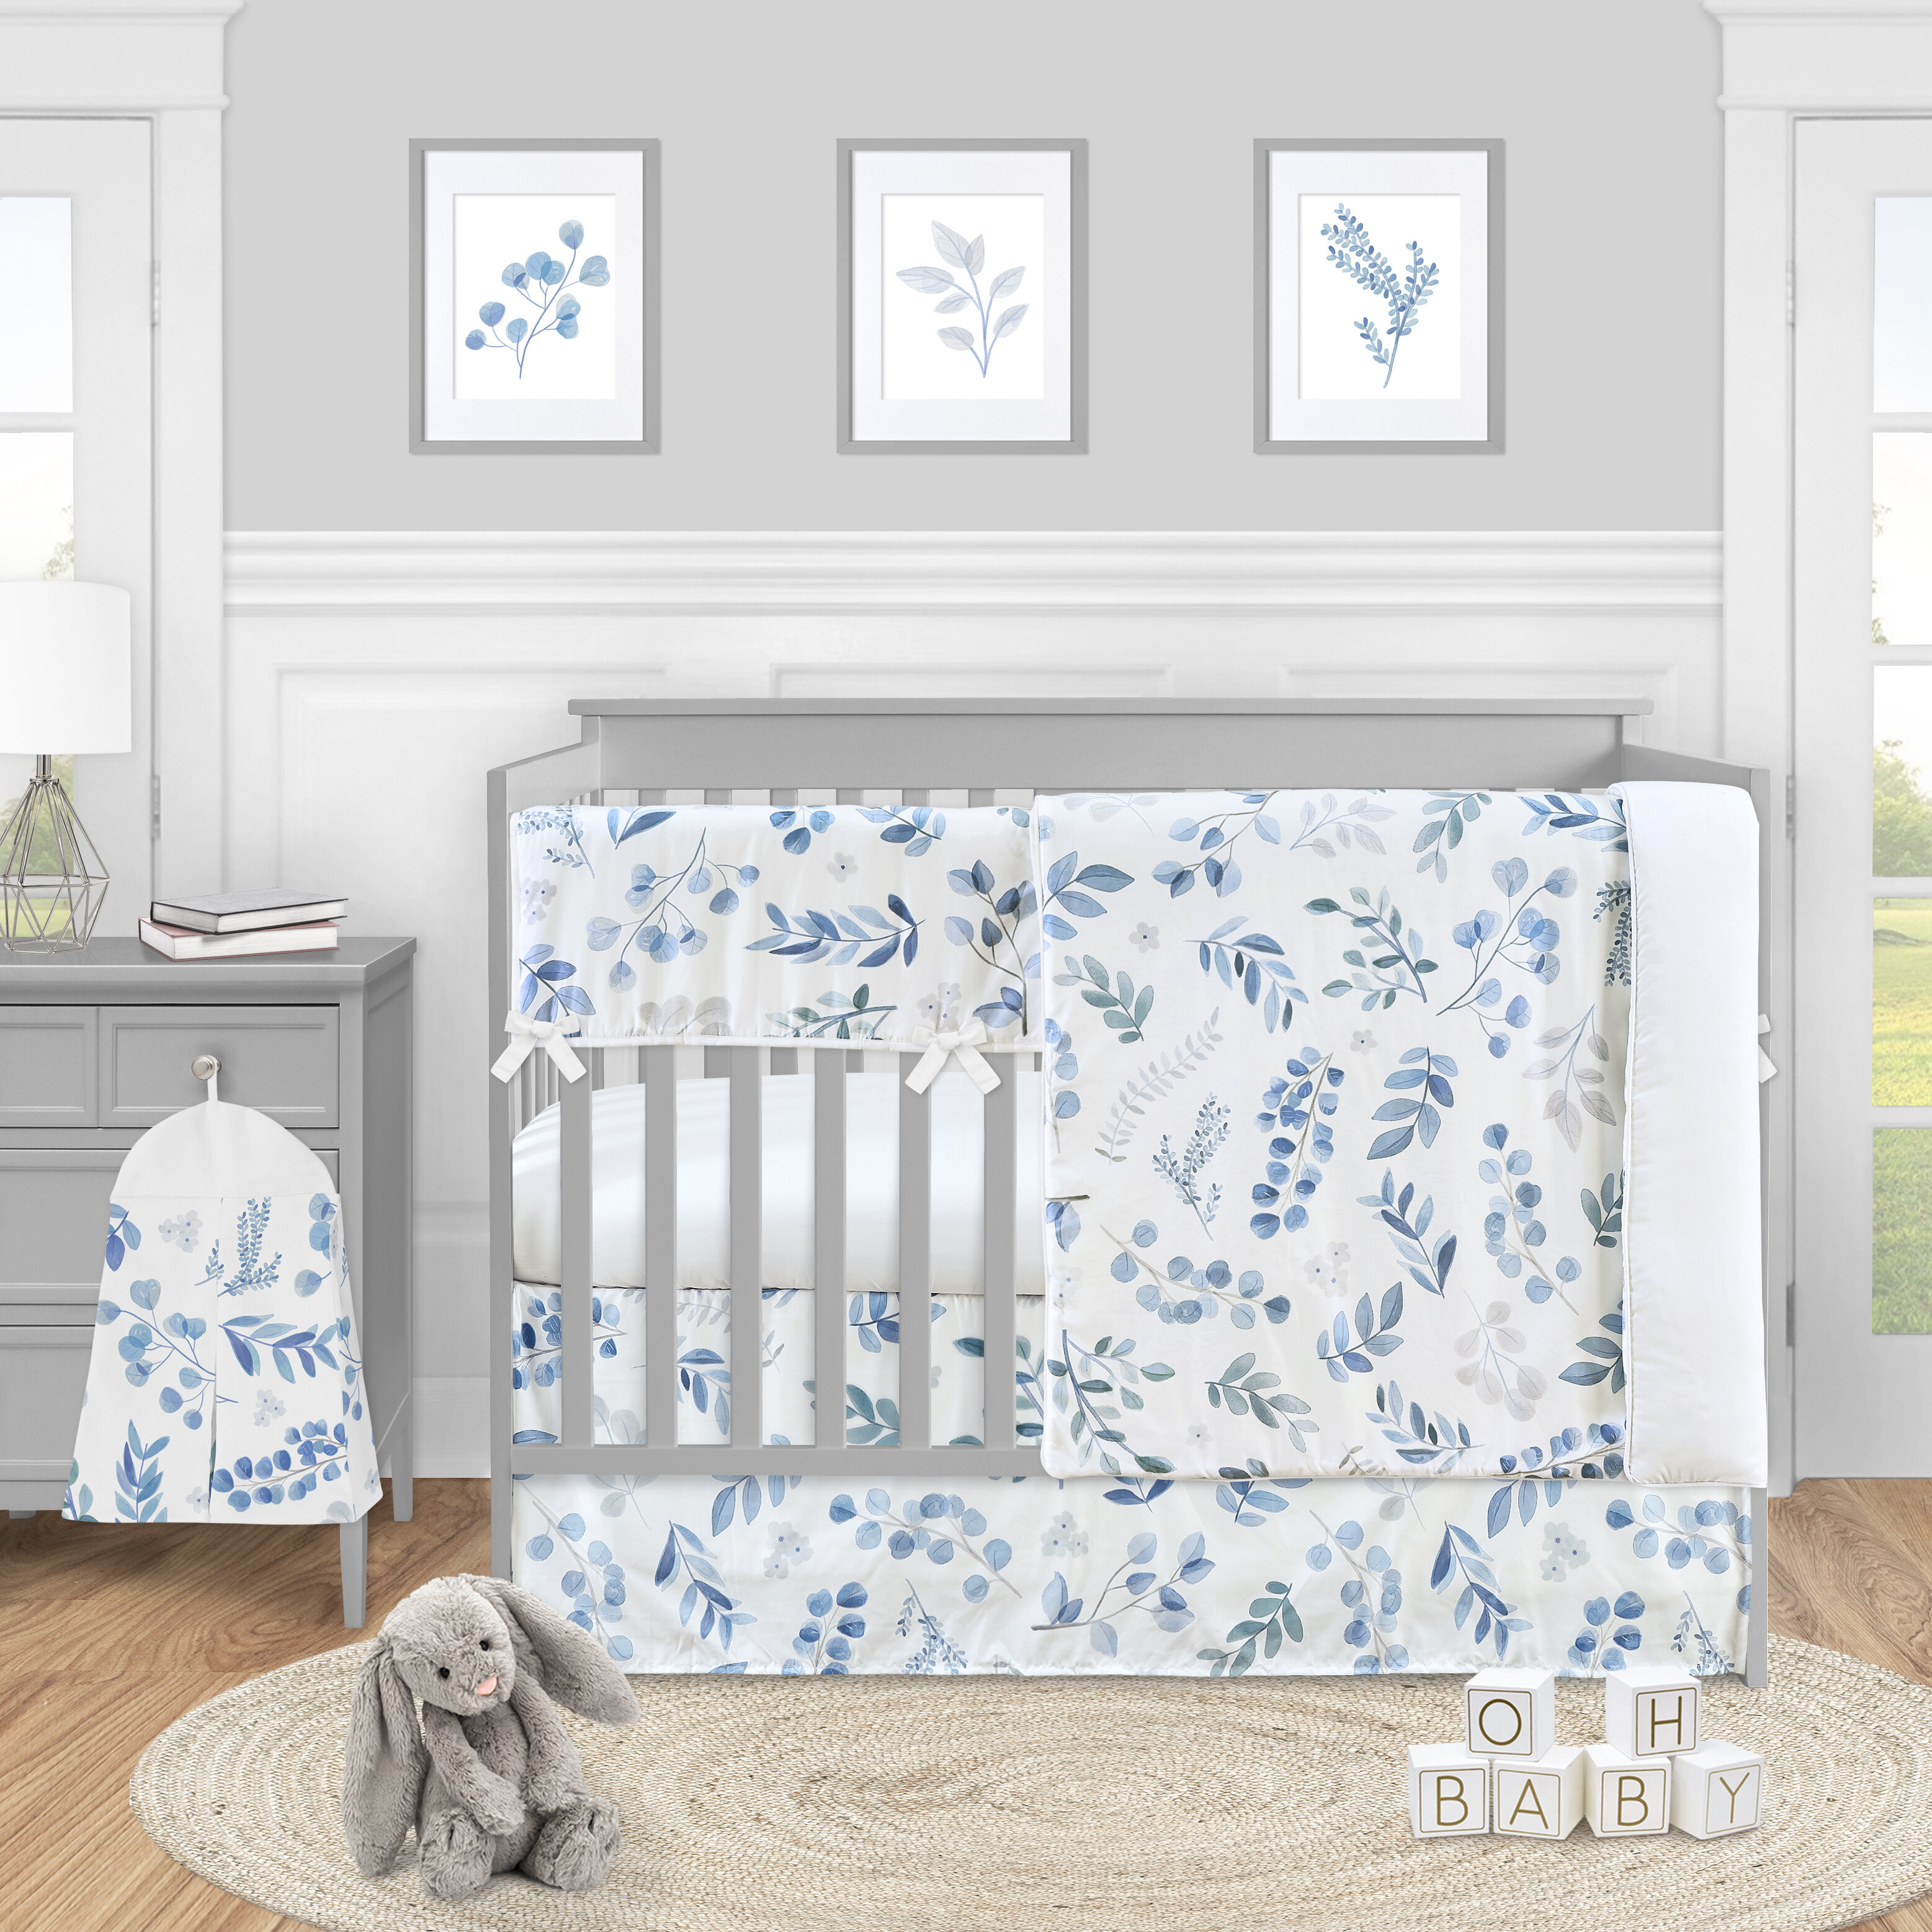 Little Grape Land Crib Bedding Sets for Boys and Girls 4 Pieces Neutral Nursery Bedding Set Includes Baby Newborn Crib Quilt Crib Crib Sheet 